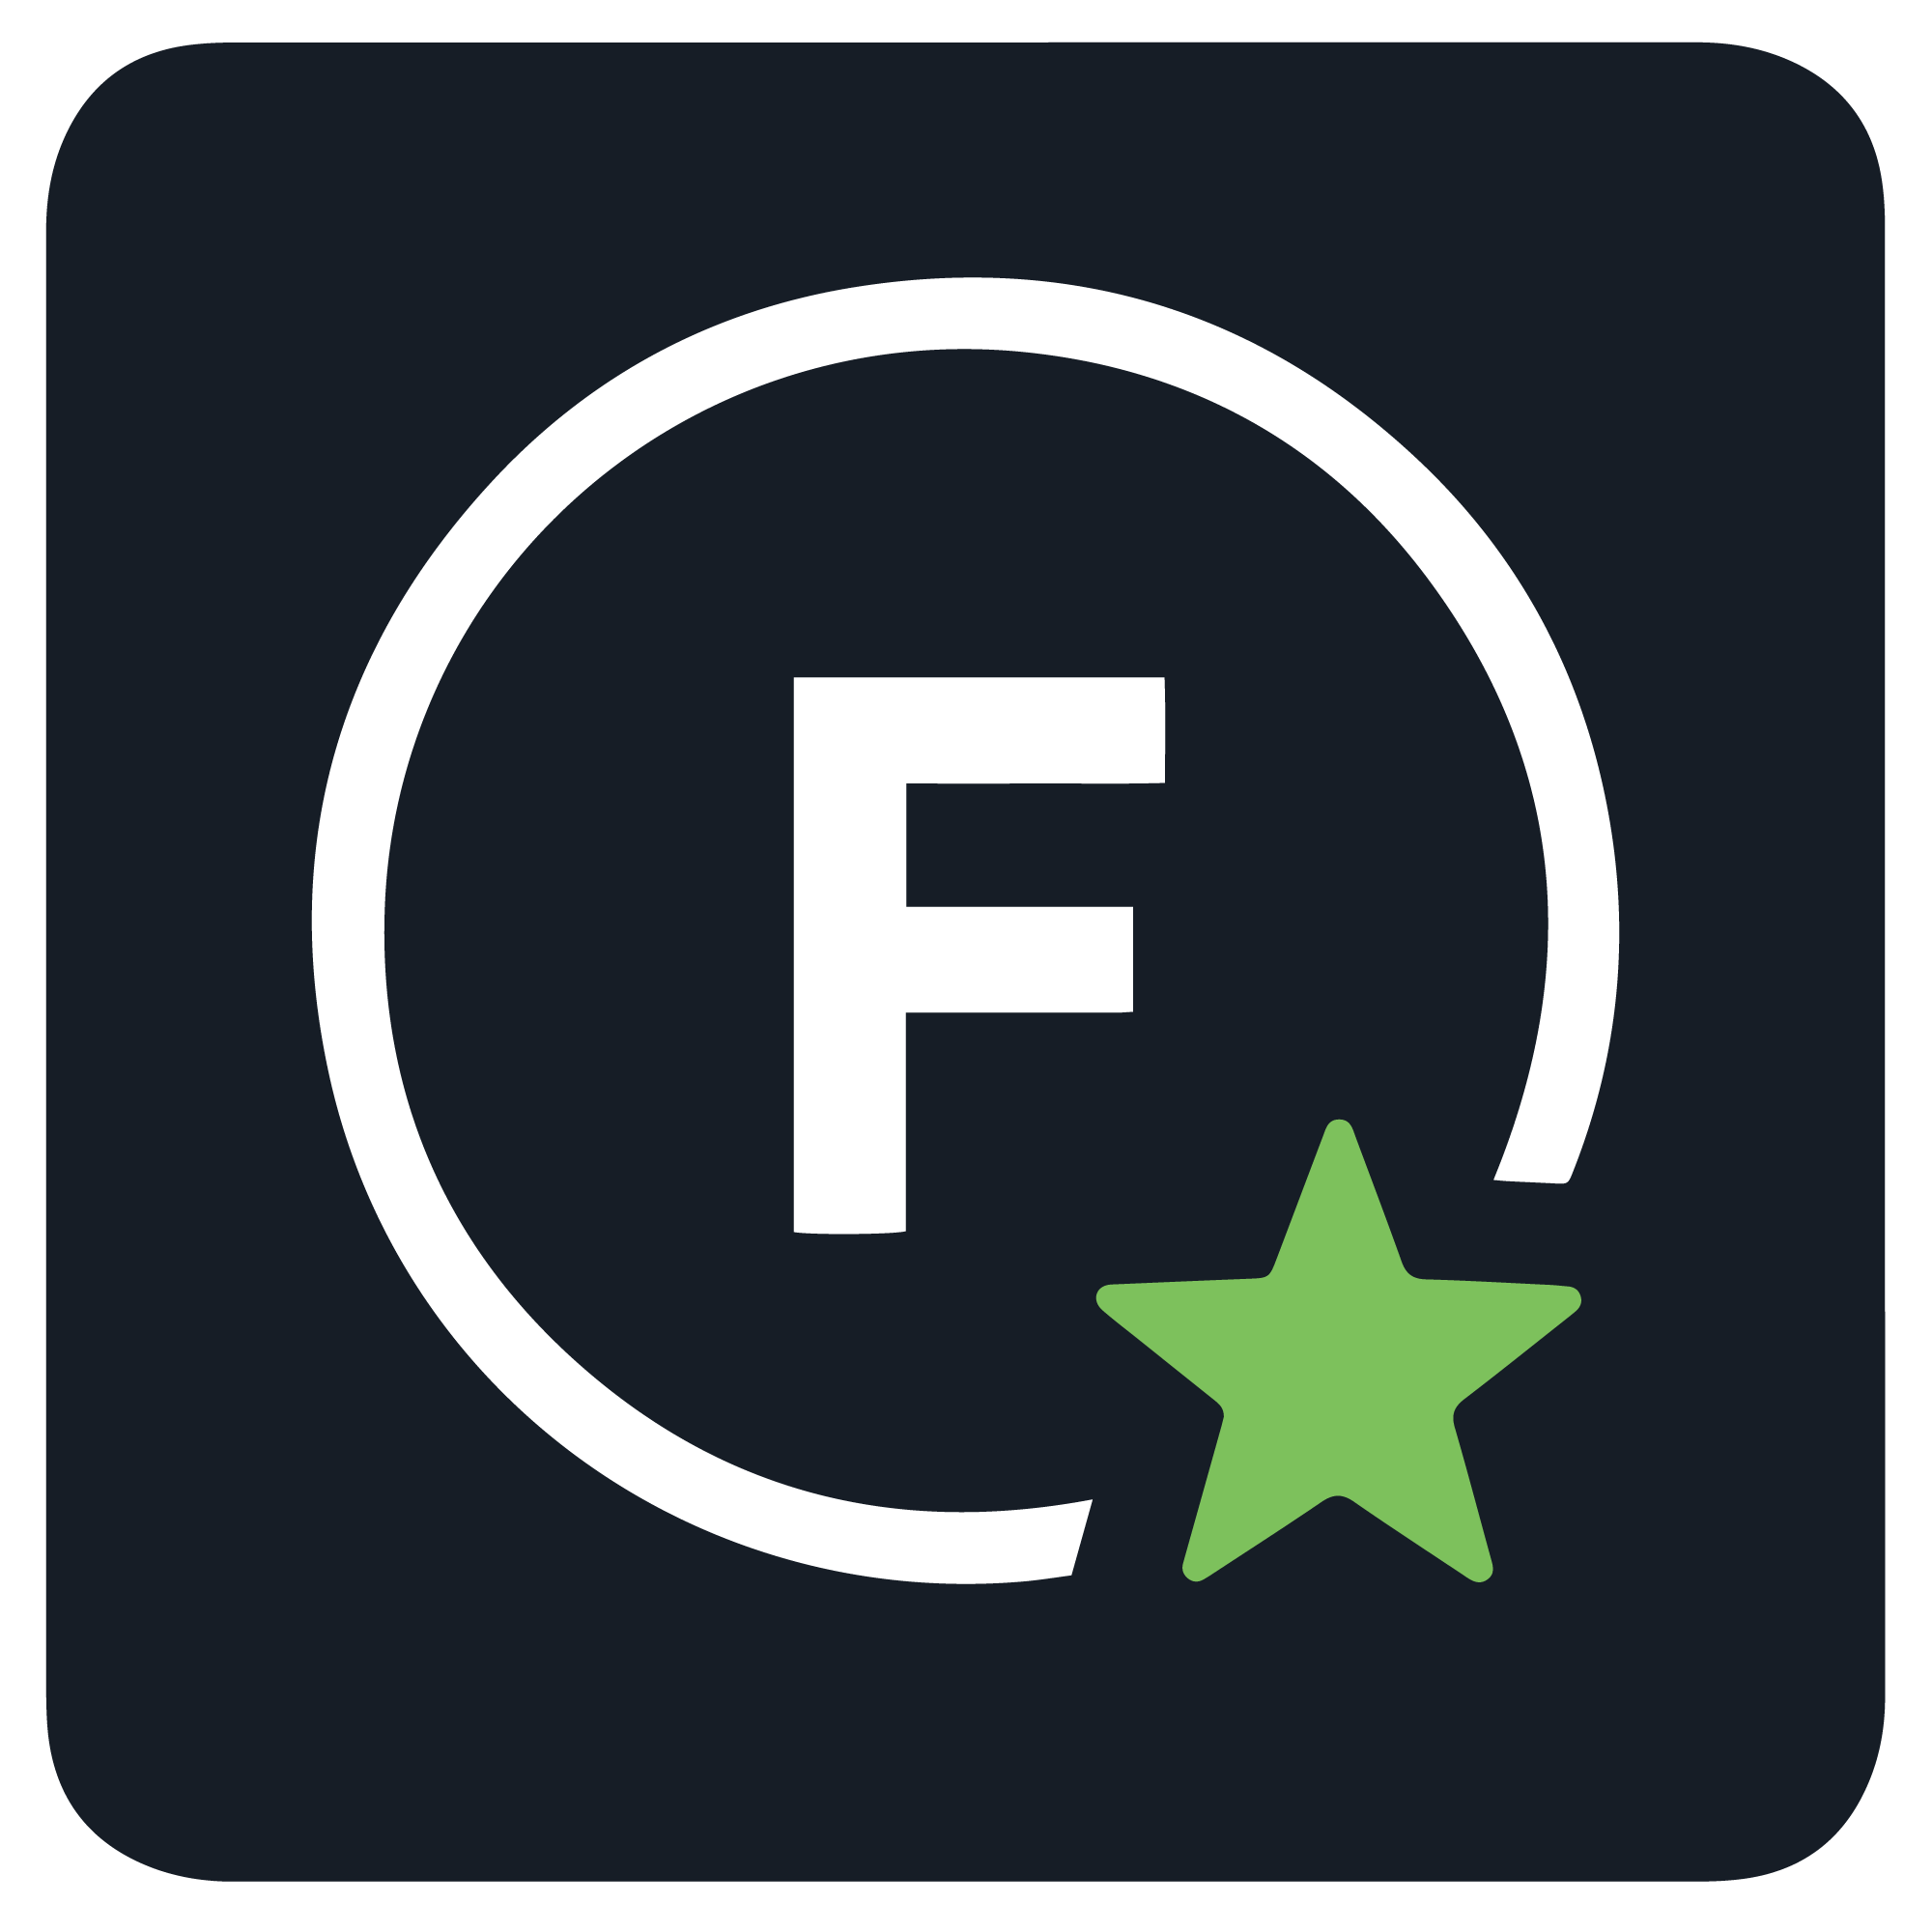 FELS Group Logo